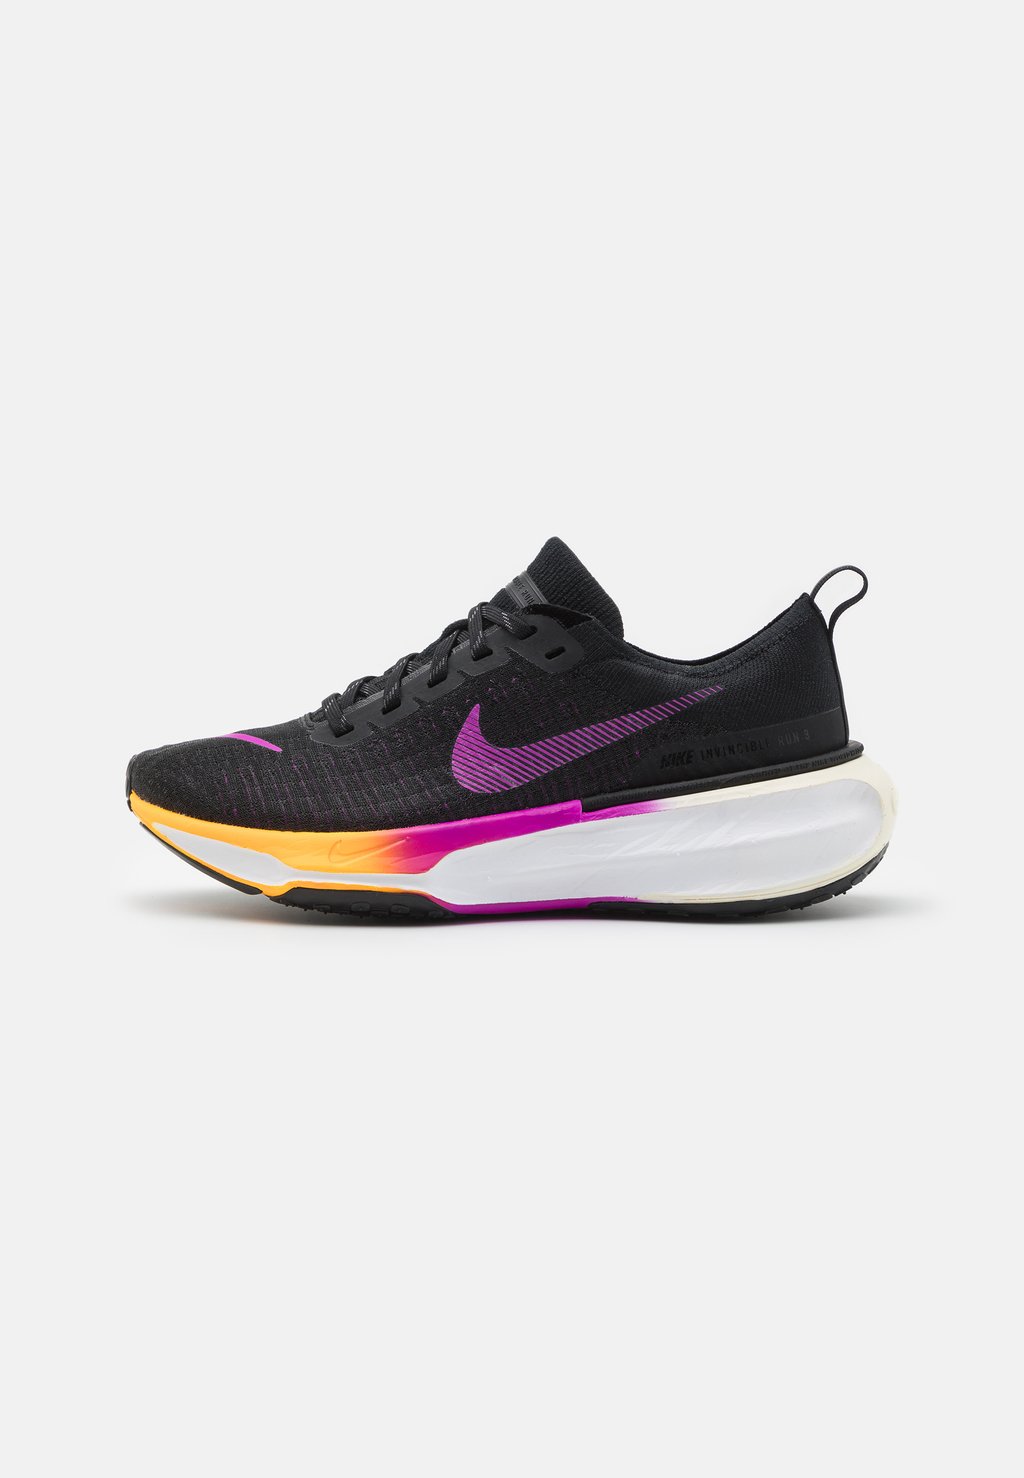 Нейтральные кроссовки ZOOMX INVINCIBLE RUN FK 3 Nike, цвет black/hyper violet/laser orange/coconut milk/anthracite/metallic black